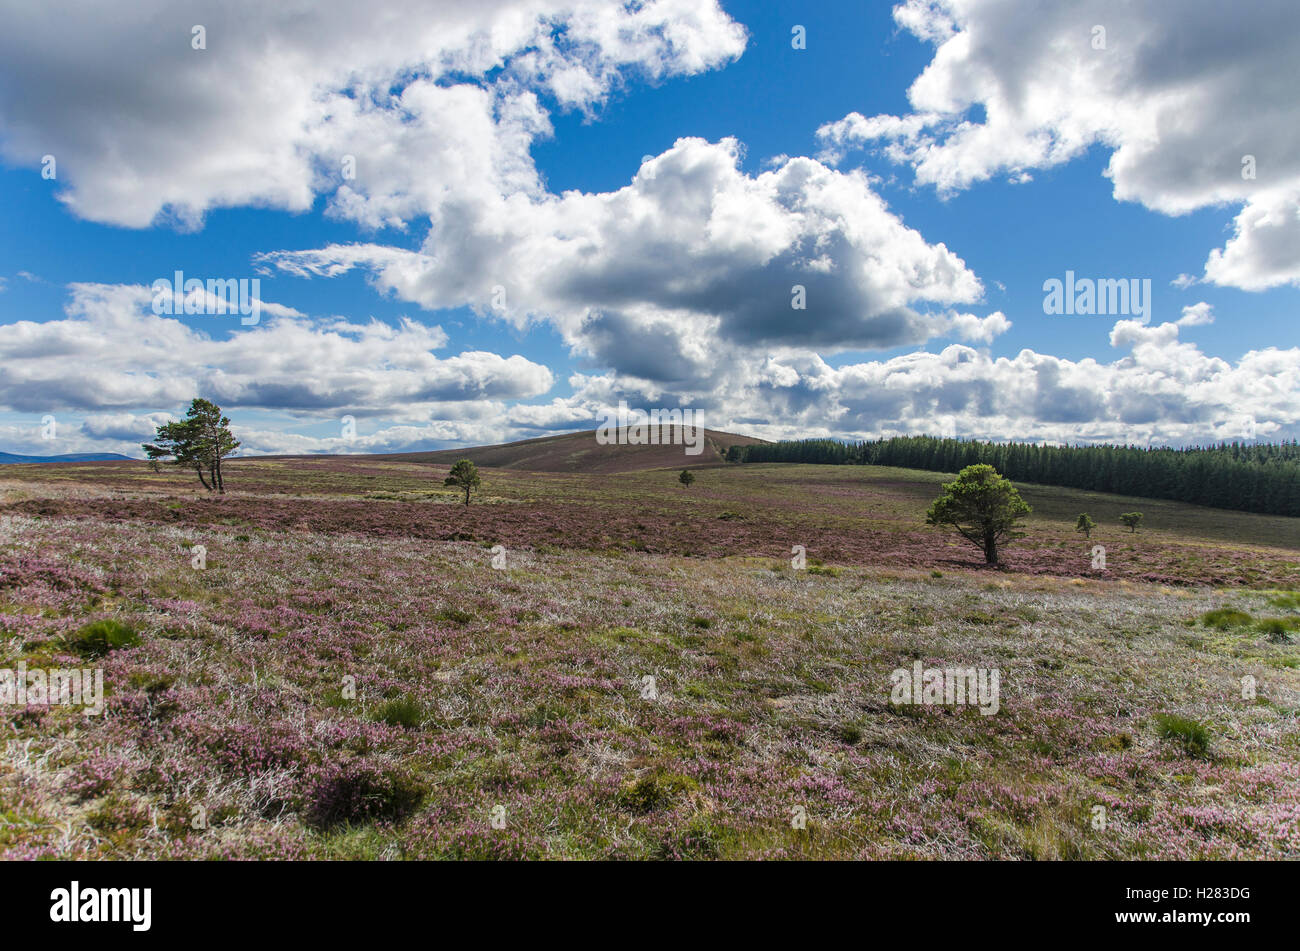 Scottish Highland Szene im schottischen Cairngorm Nation Park, windgepeitschten Moor mit Blüte lila Heidekraut. Wolken, Hang Stockfoto